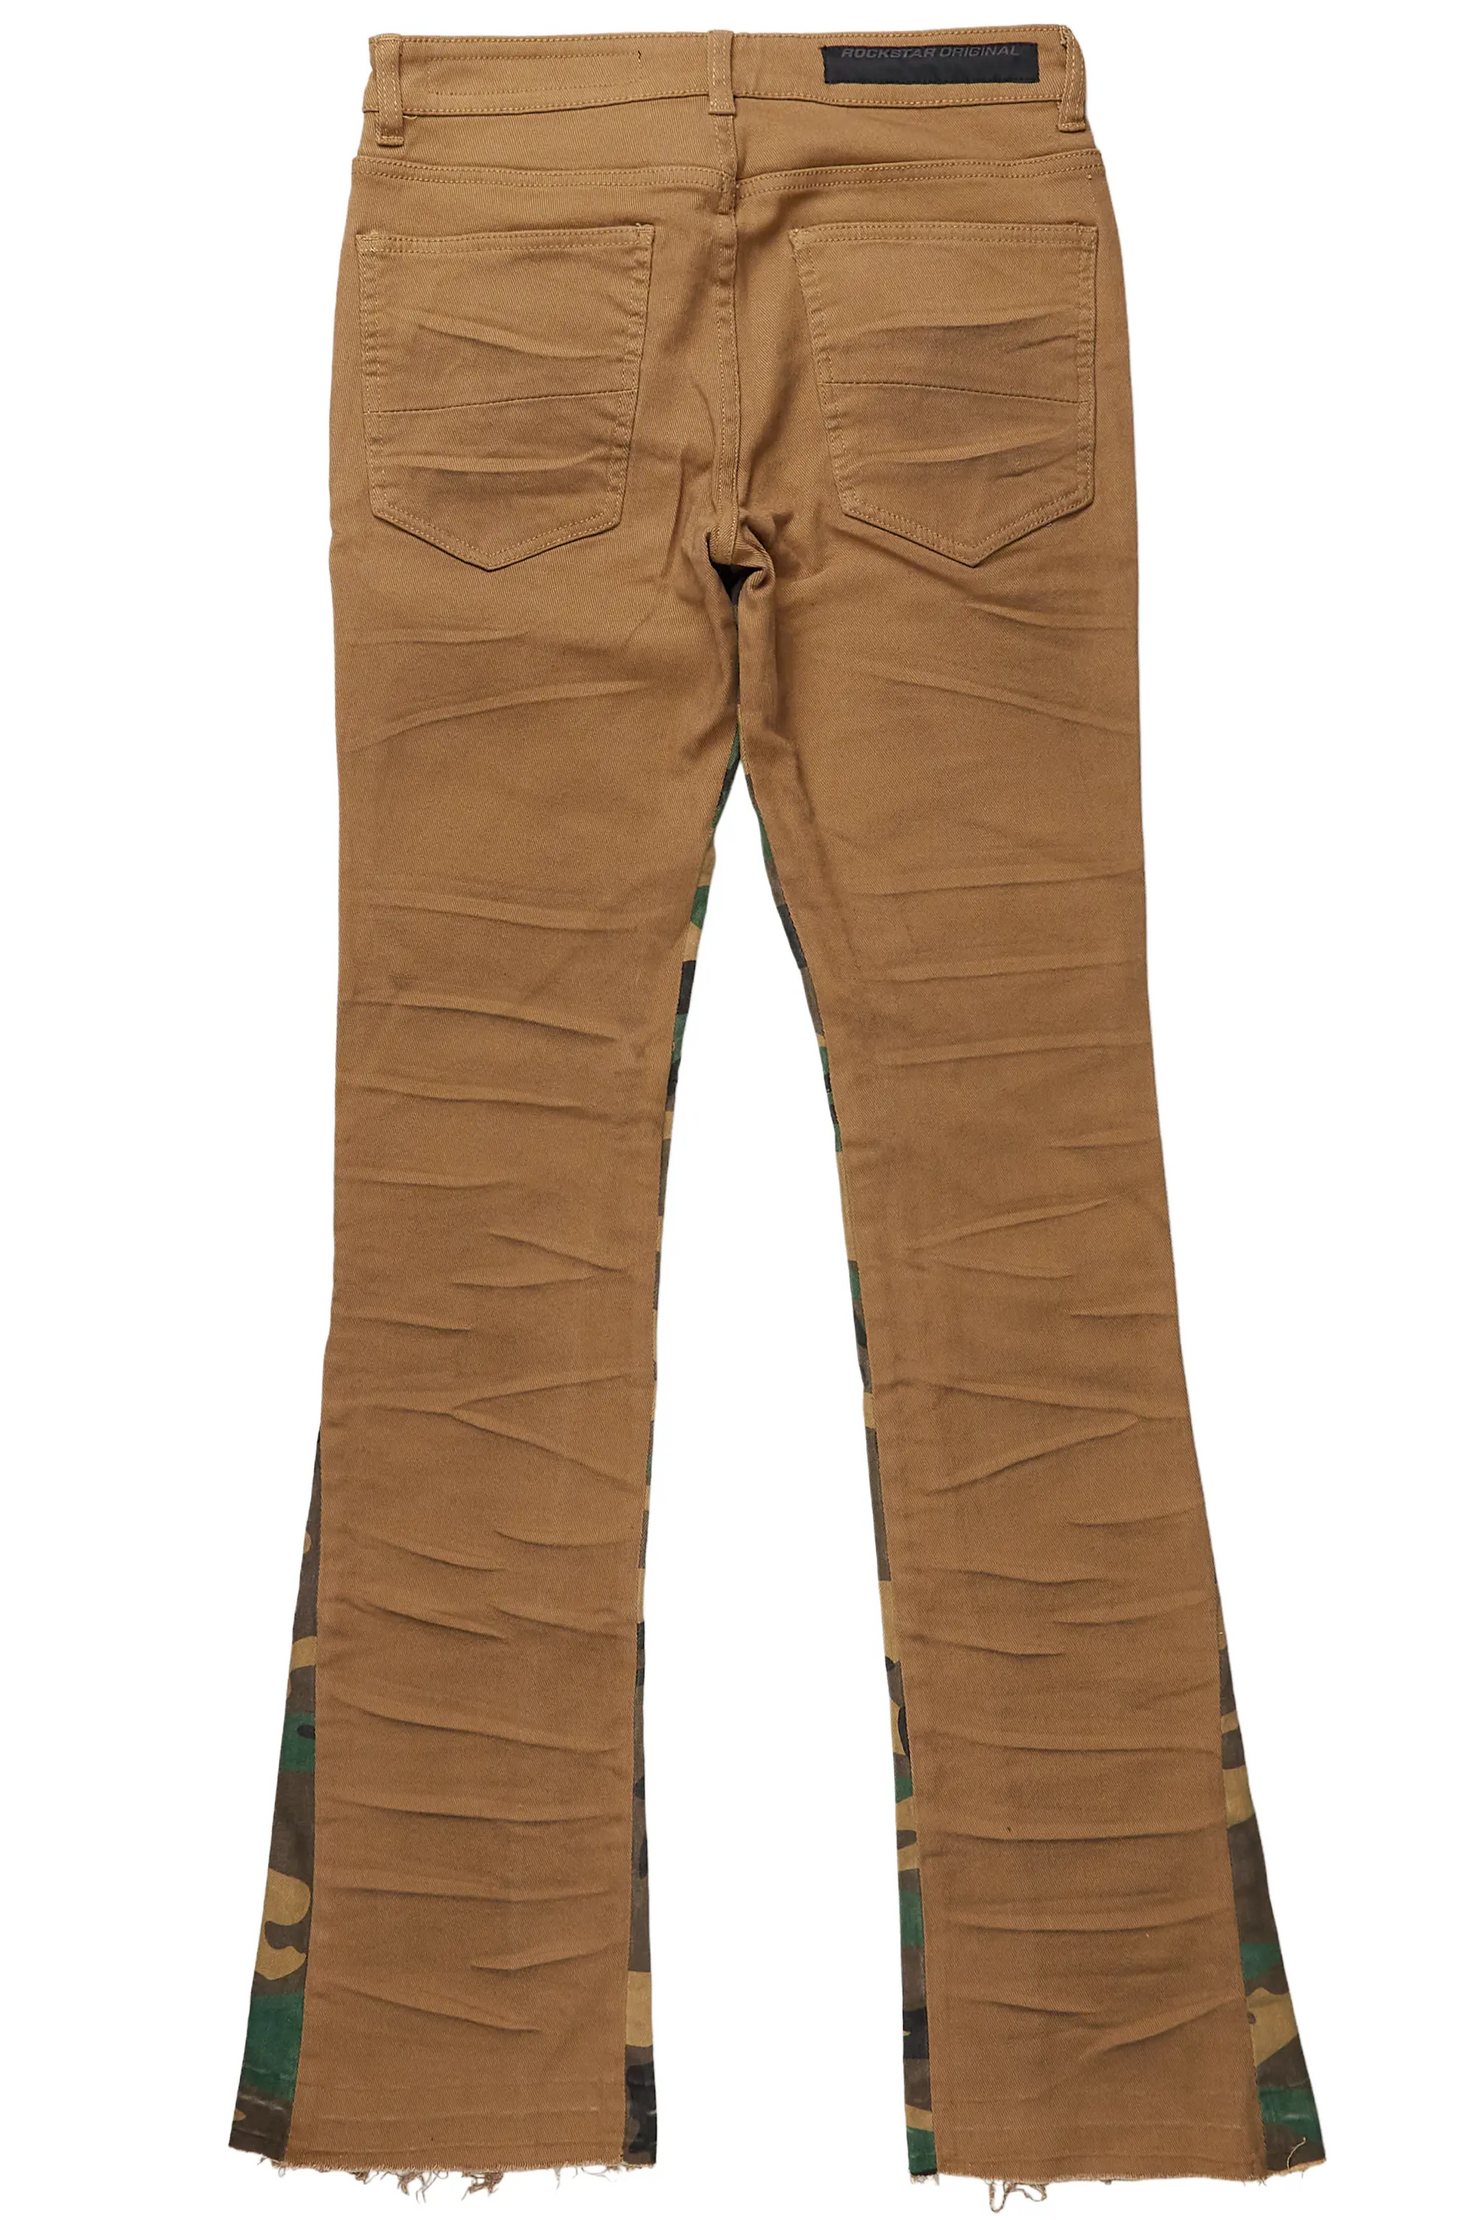 Strass Brown Stacked Flare Jean– Rockstar Original